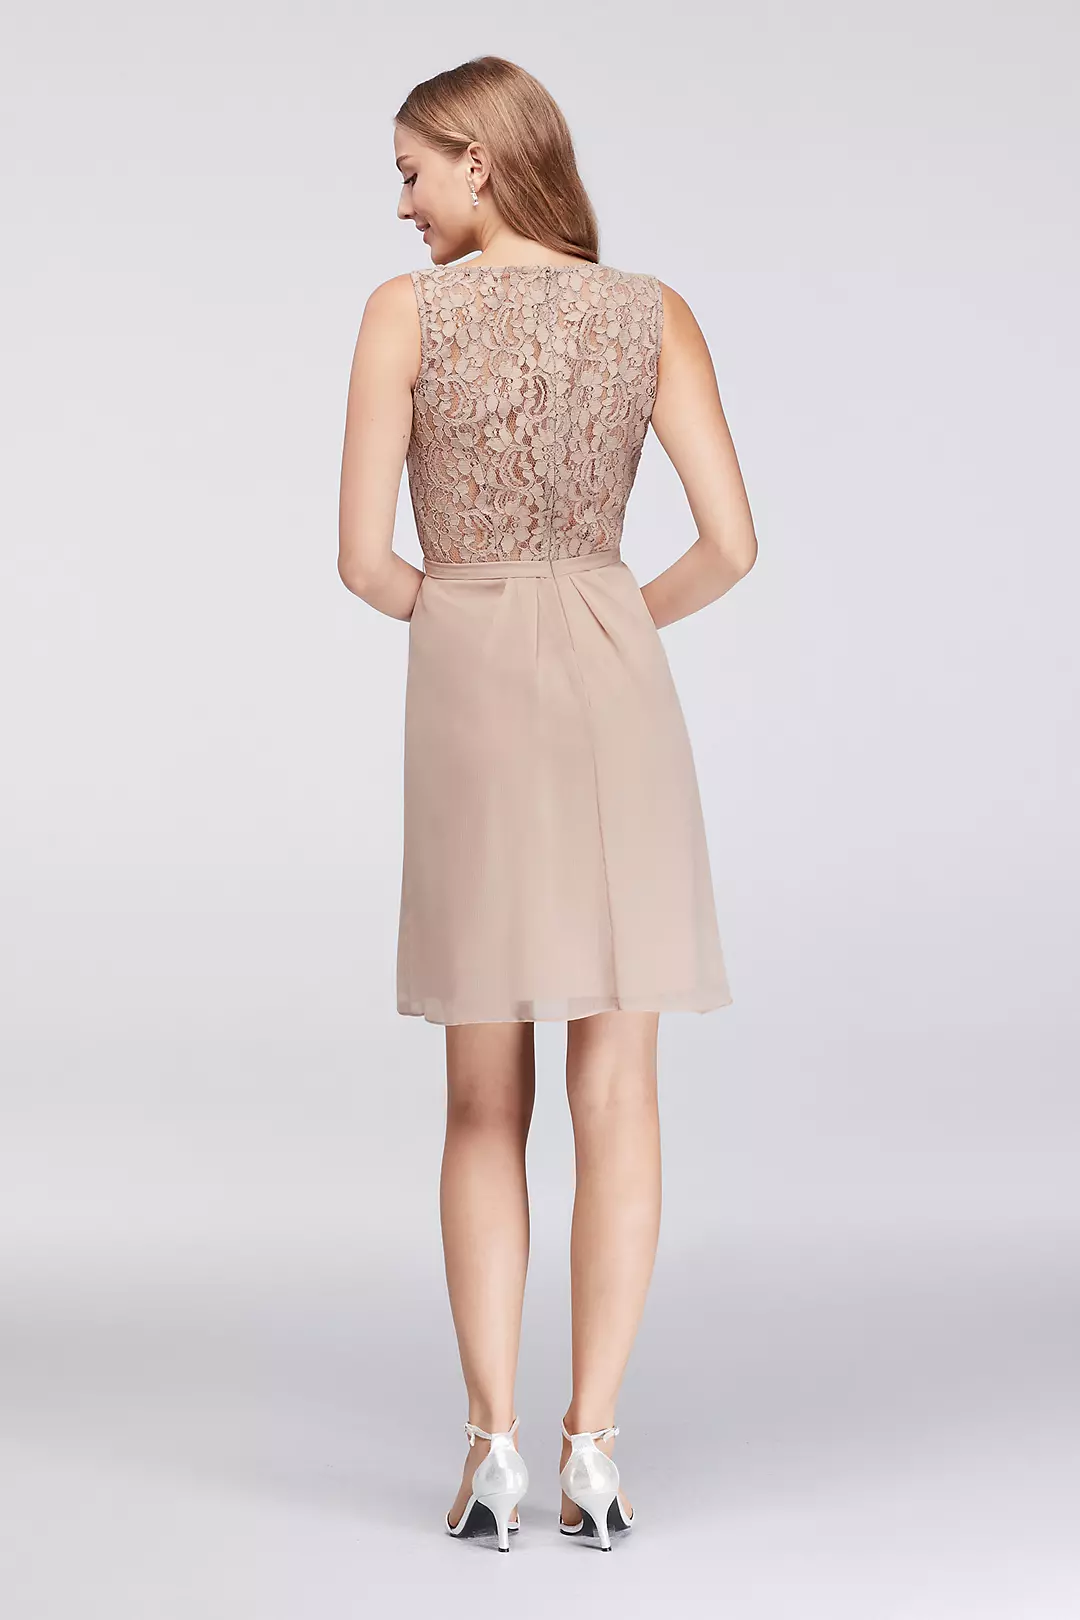 Chiffon V-Neck Dress with Lace Back Image 2